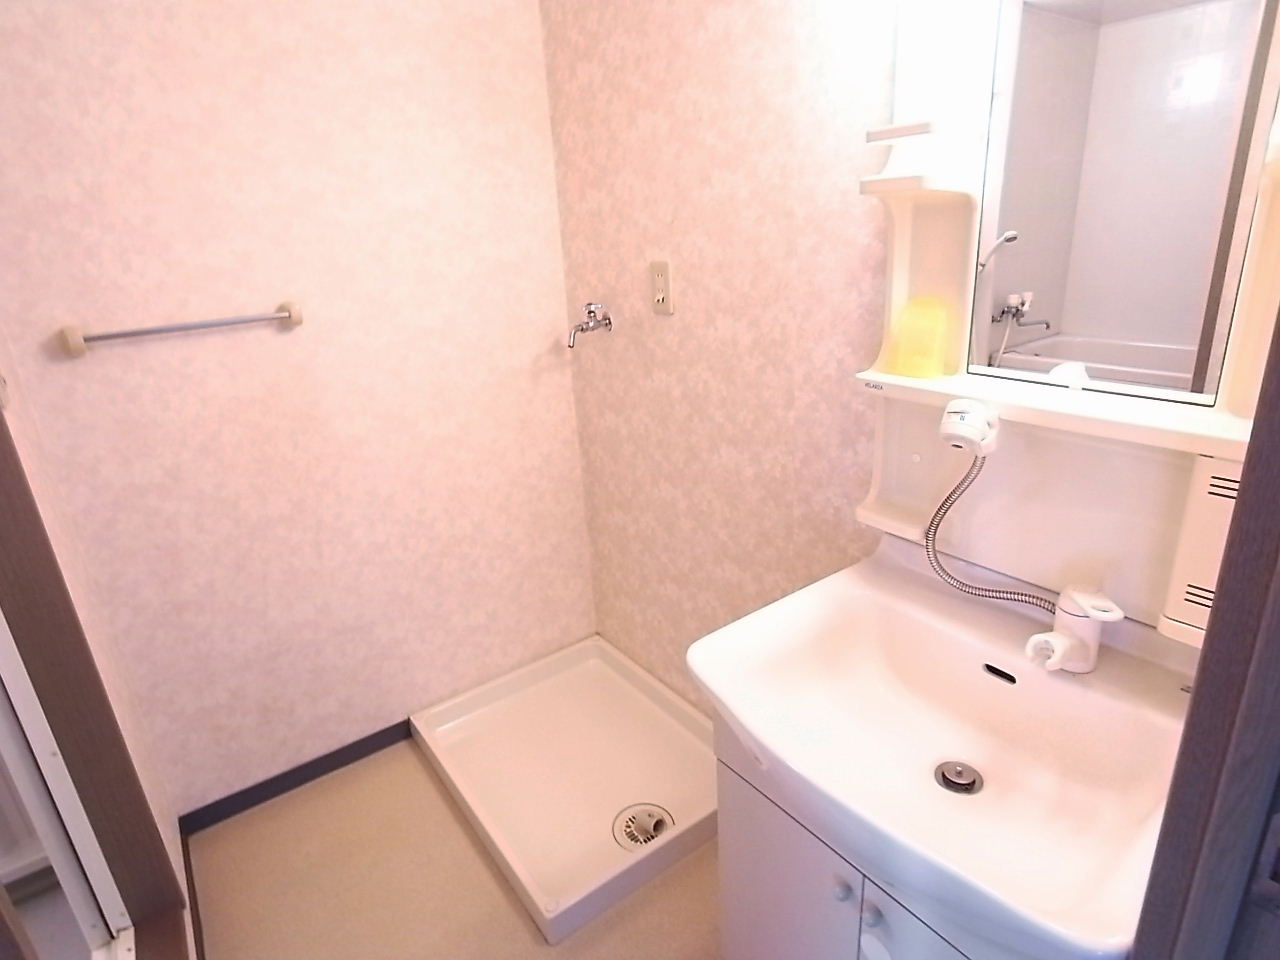 Washroom. Same property reference photograph